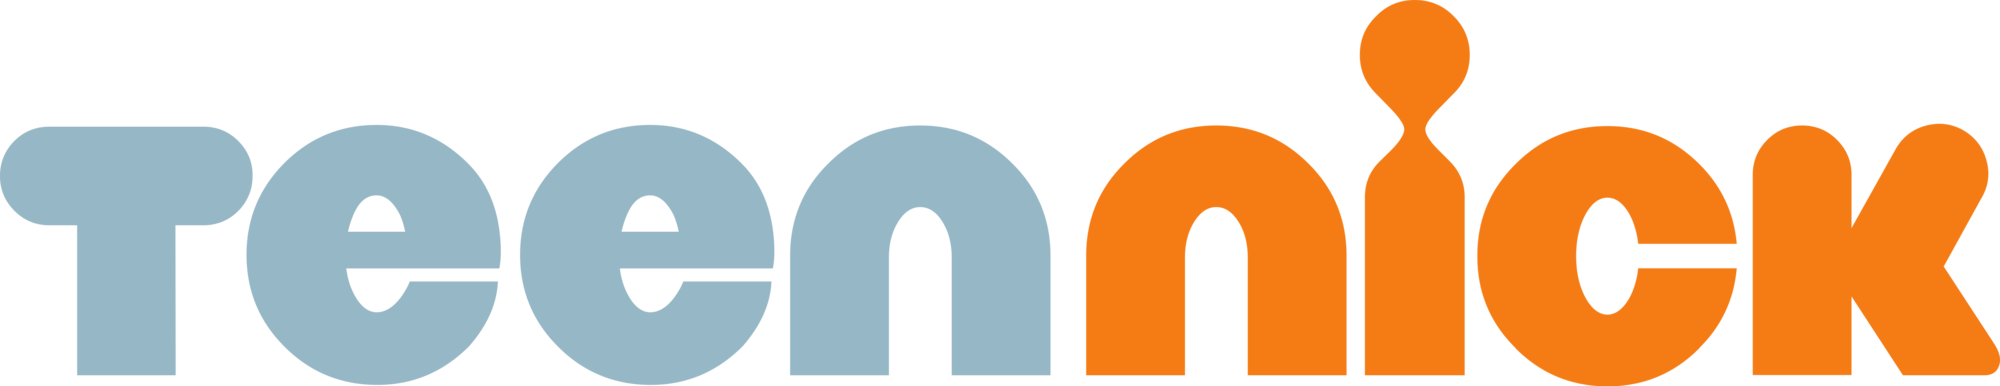 The N TeenNick Logo - TeenNick | Nickelodeon | FANDOM powered by Wikia